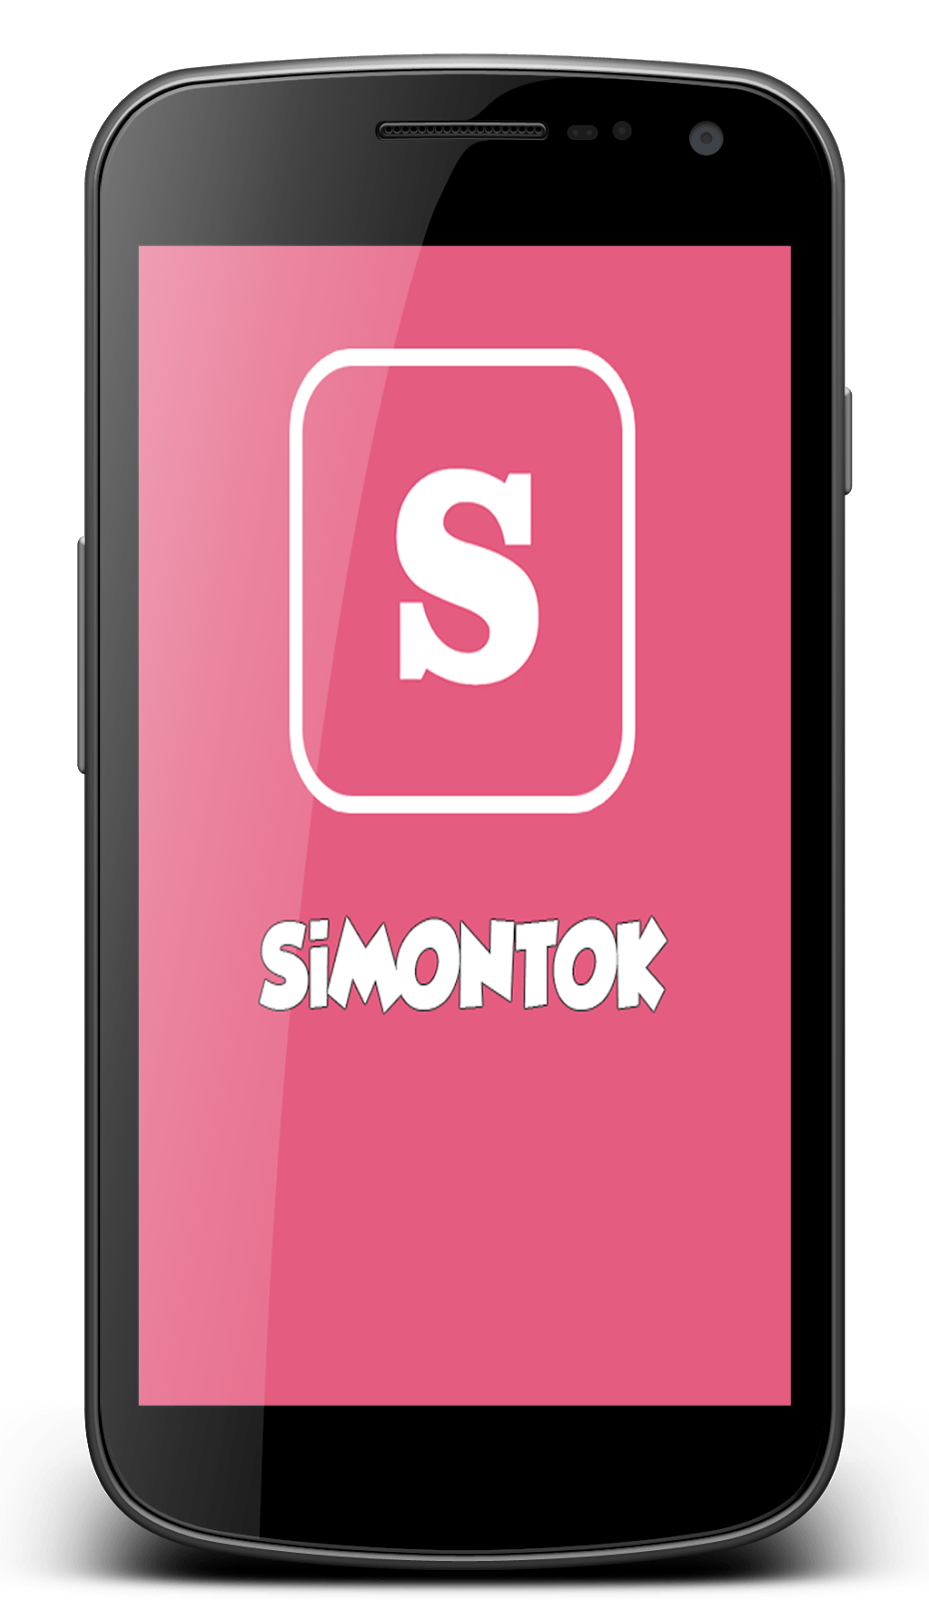 simontok app 2020 apk download latest version 2.0 jalantikus